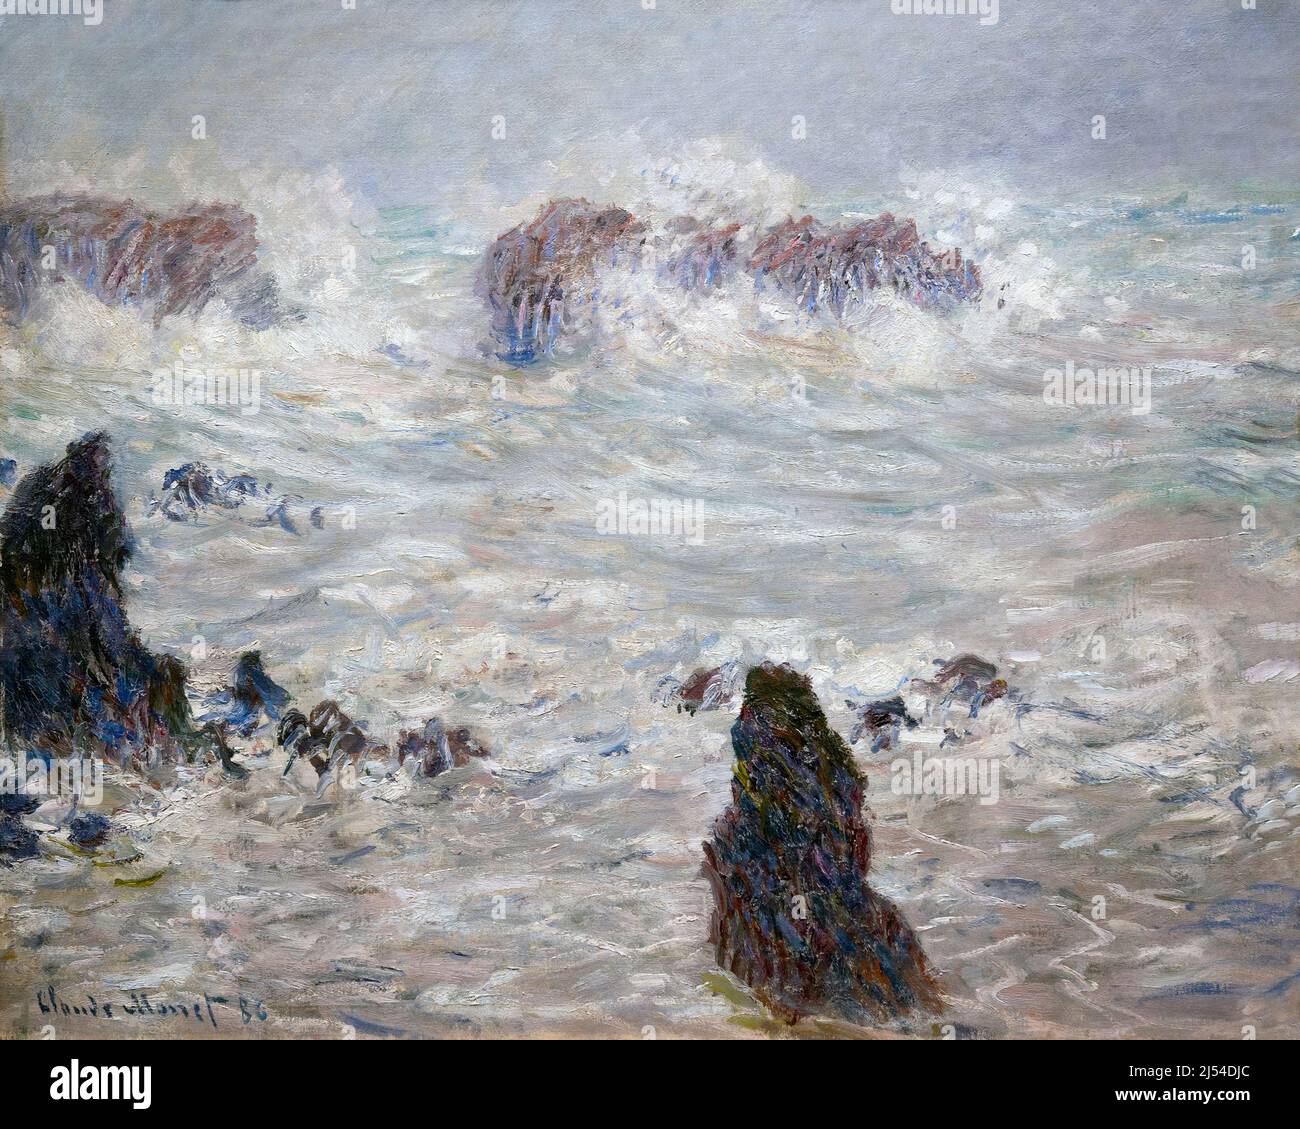 Sturm an der Küste von Belle-Ile, Sturm, vor der Küste von Belle-Ile, Tempete, Cotes de Belle-Ile, Claude Monet, 1886, Musée D'Orsay, Paris, Frankreich, EUR Stockfoto